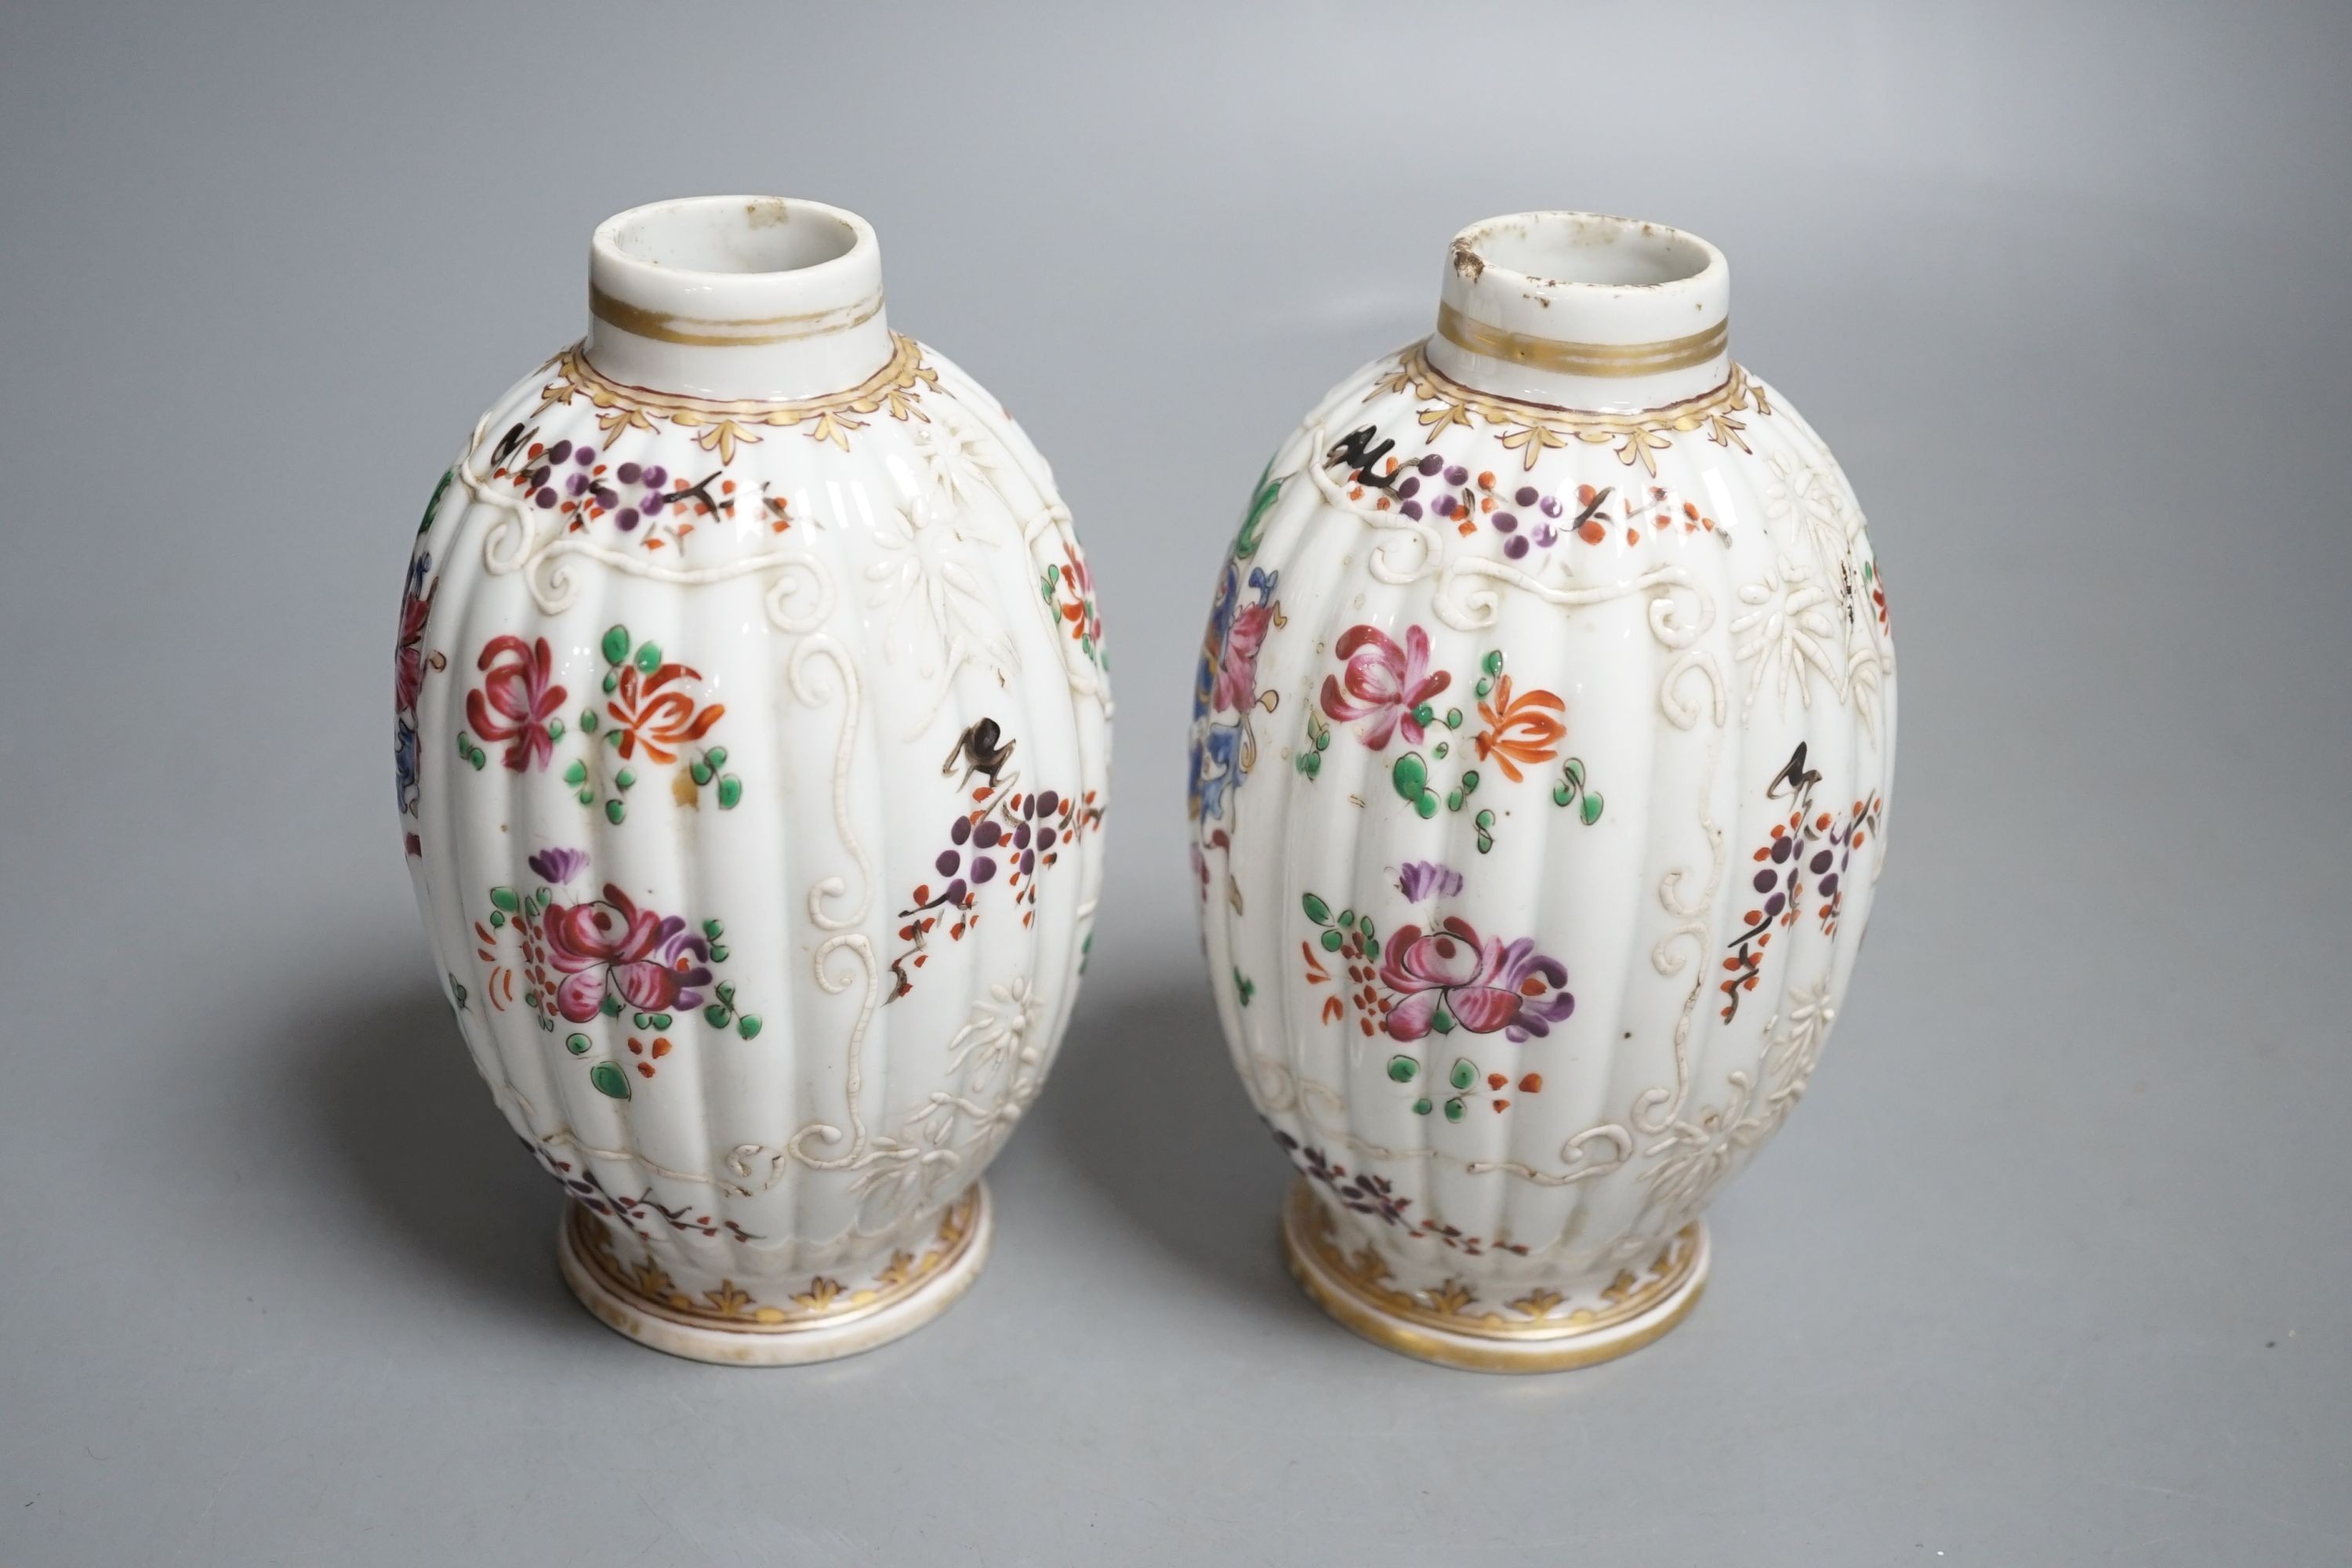 A pair of Paris porcelain Chinese armorial style porcelain tea caddies - 13.5cm tall